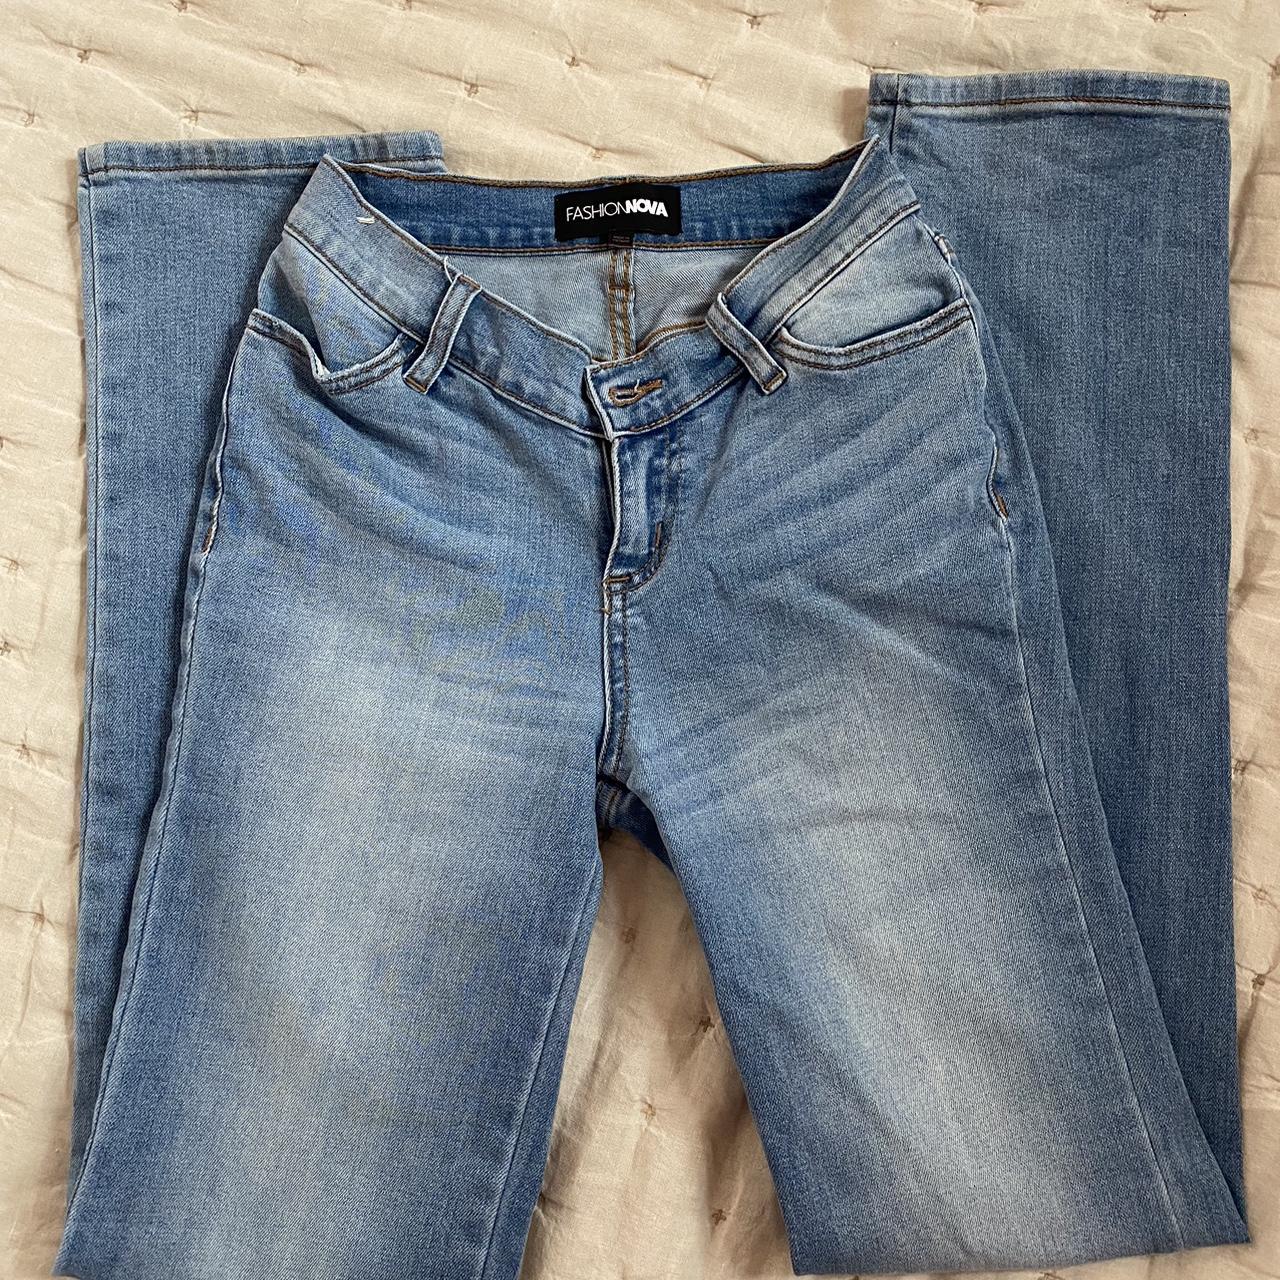 light wash fashion nova jeans size 0 #fashionnovajeans - Depop